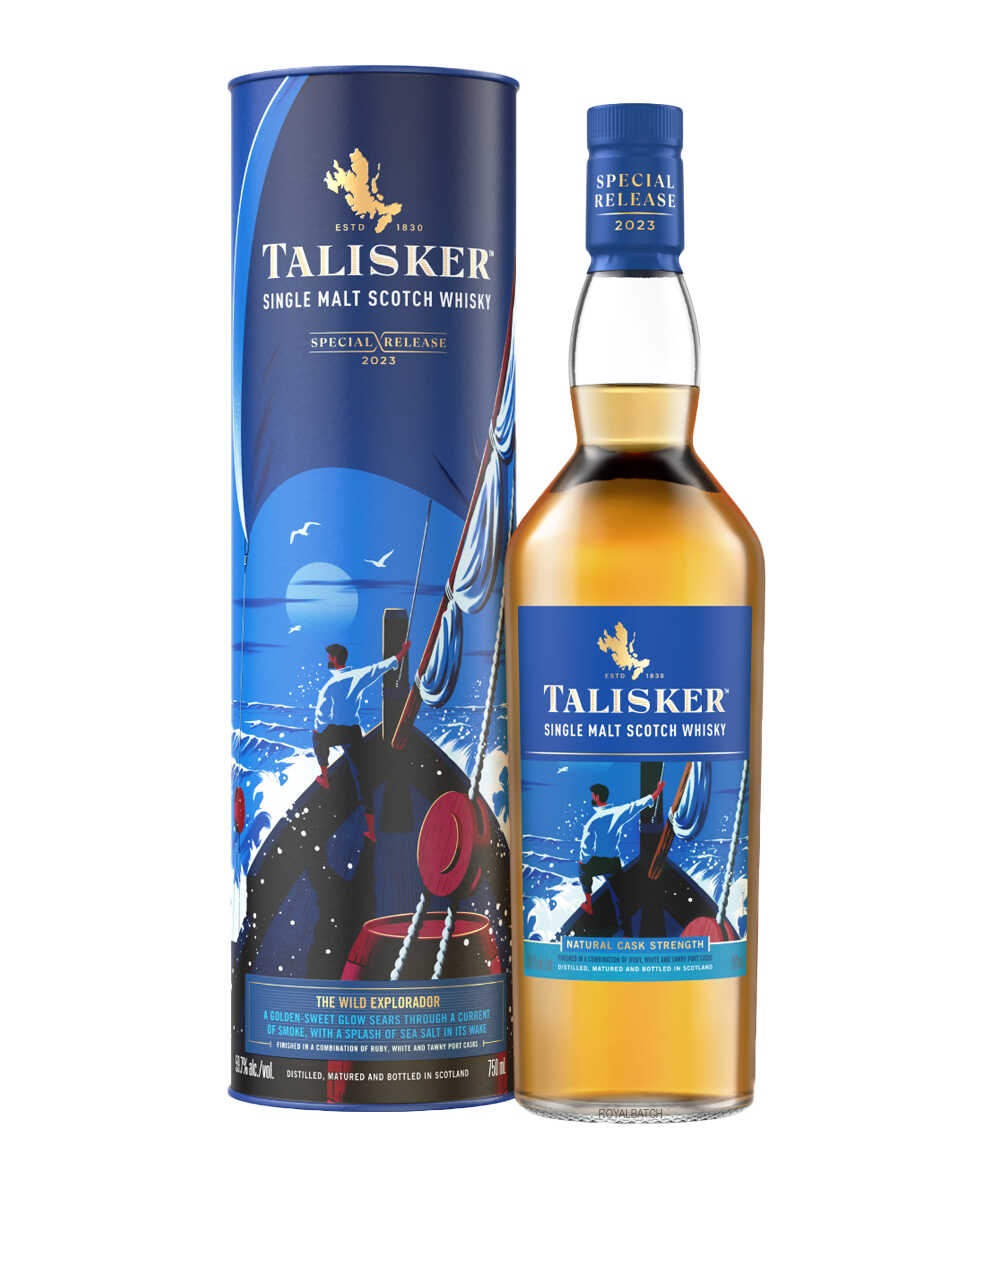 Talisker The Wild Explorador Special Release Single Malt Scotch Whisky 2023